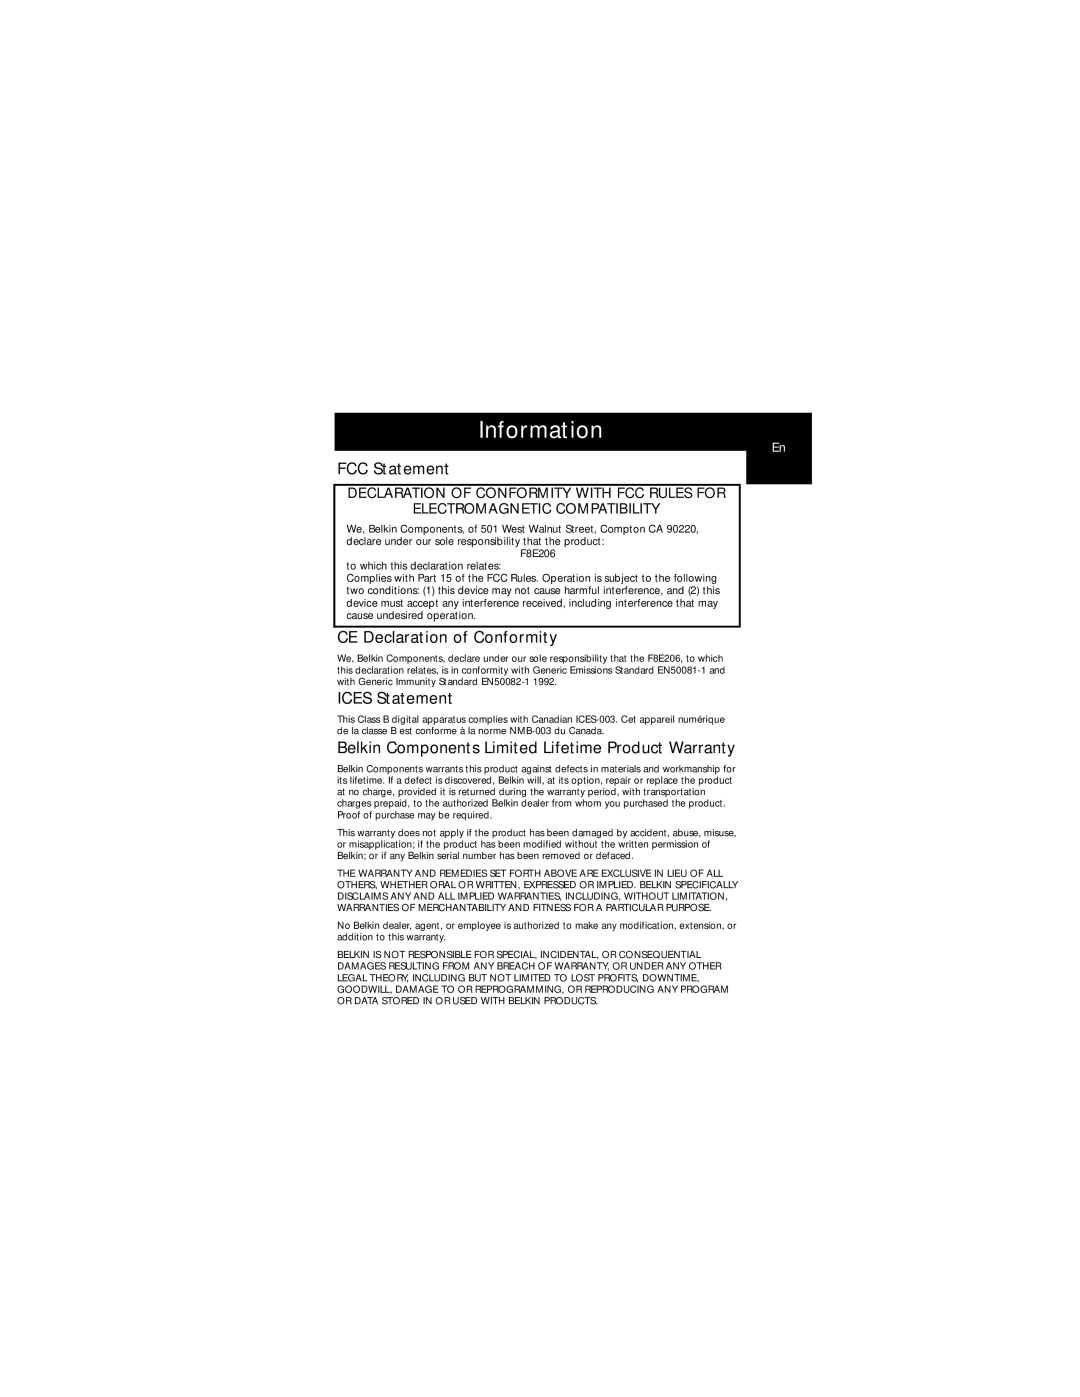 Belkin P73092 user manual Information, FCC Statement, CE Declaration of Conformity, ICES Statement 